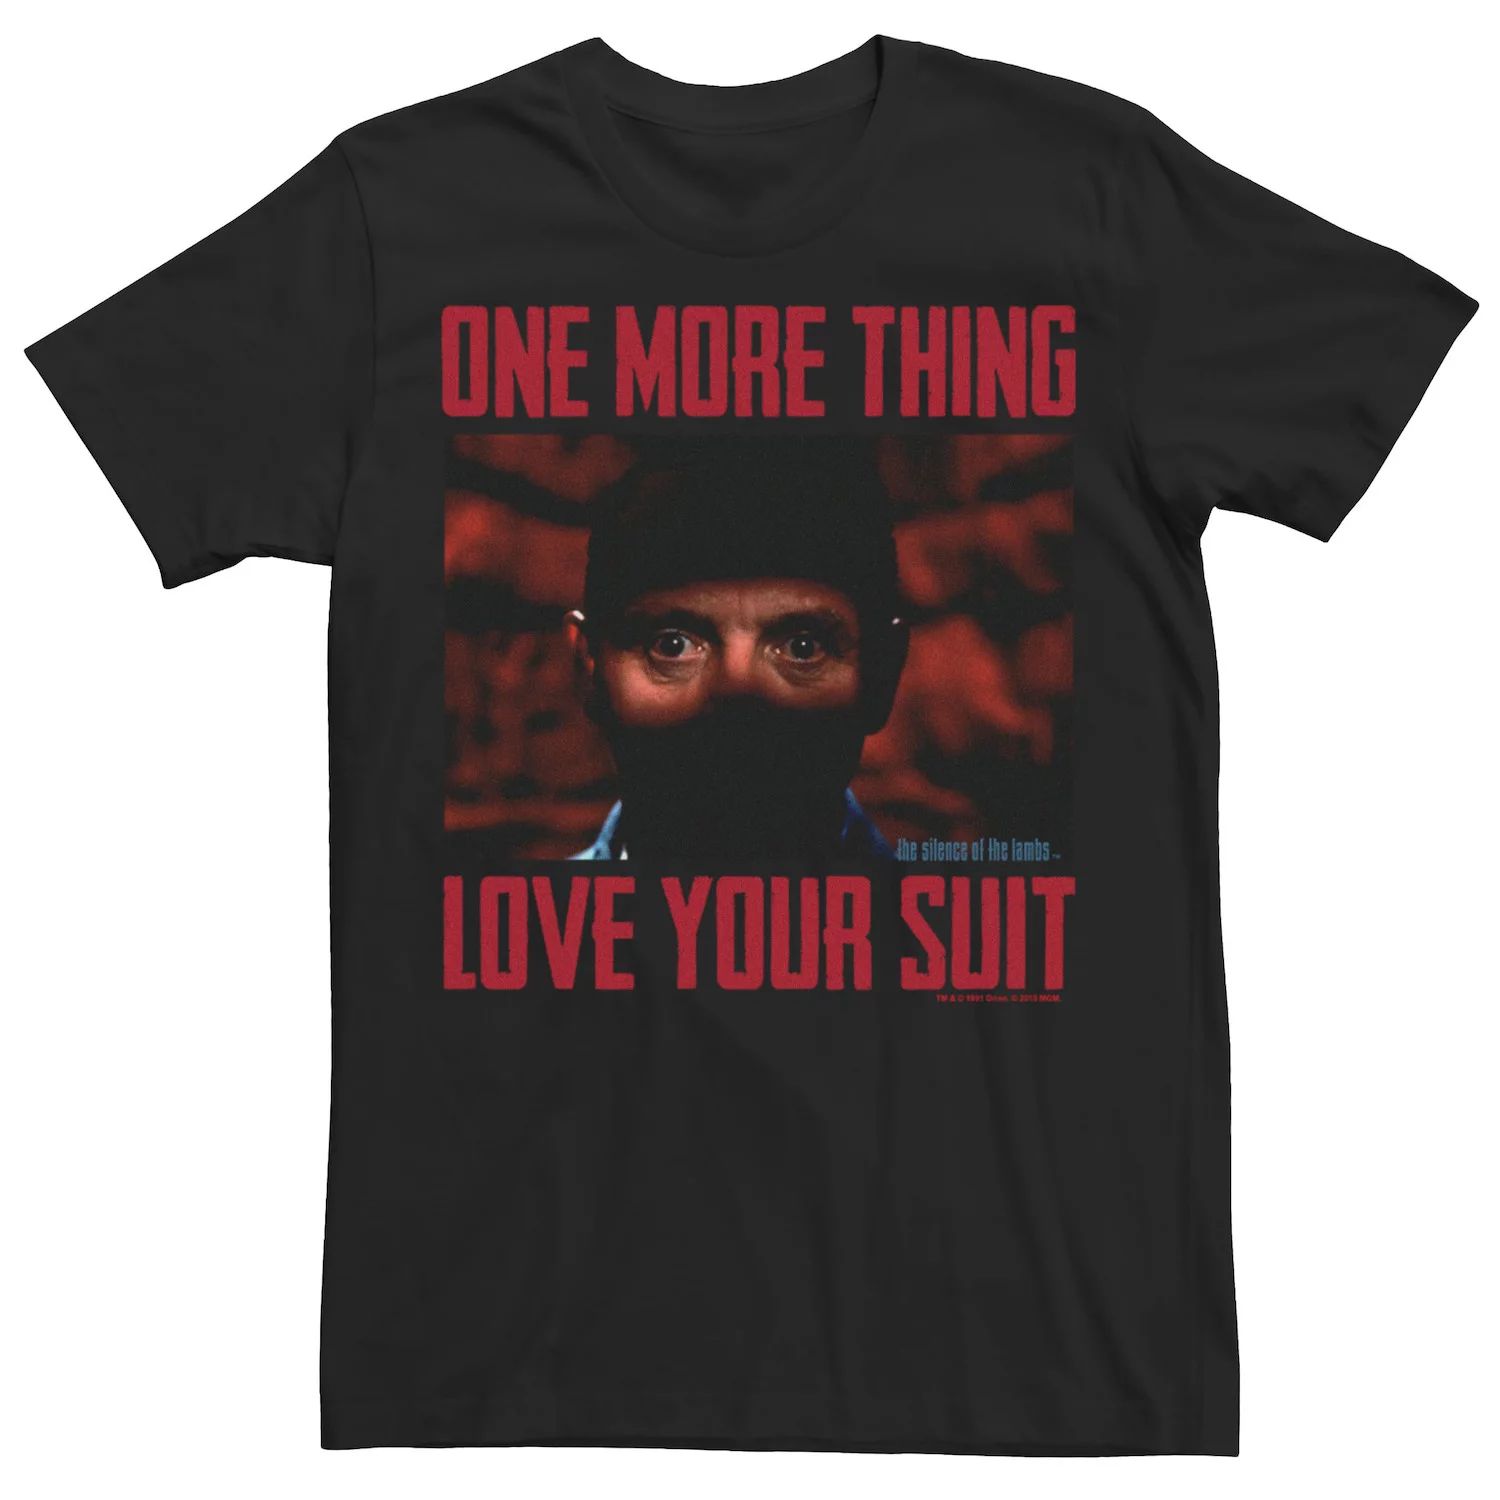 Мужская футболка с рисунком «Молчание ягнят Ганнибал Лектер» Love Your Suit Licensed Character